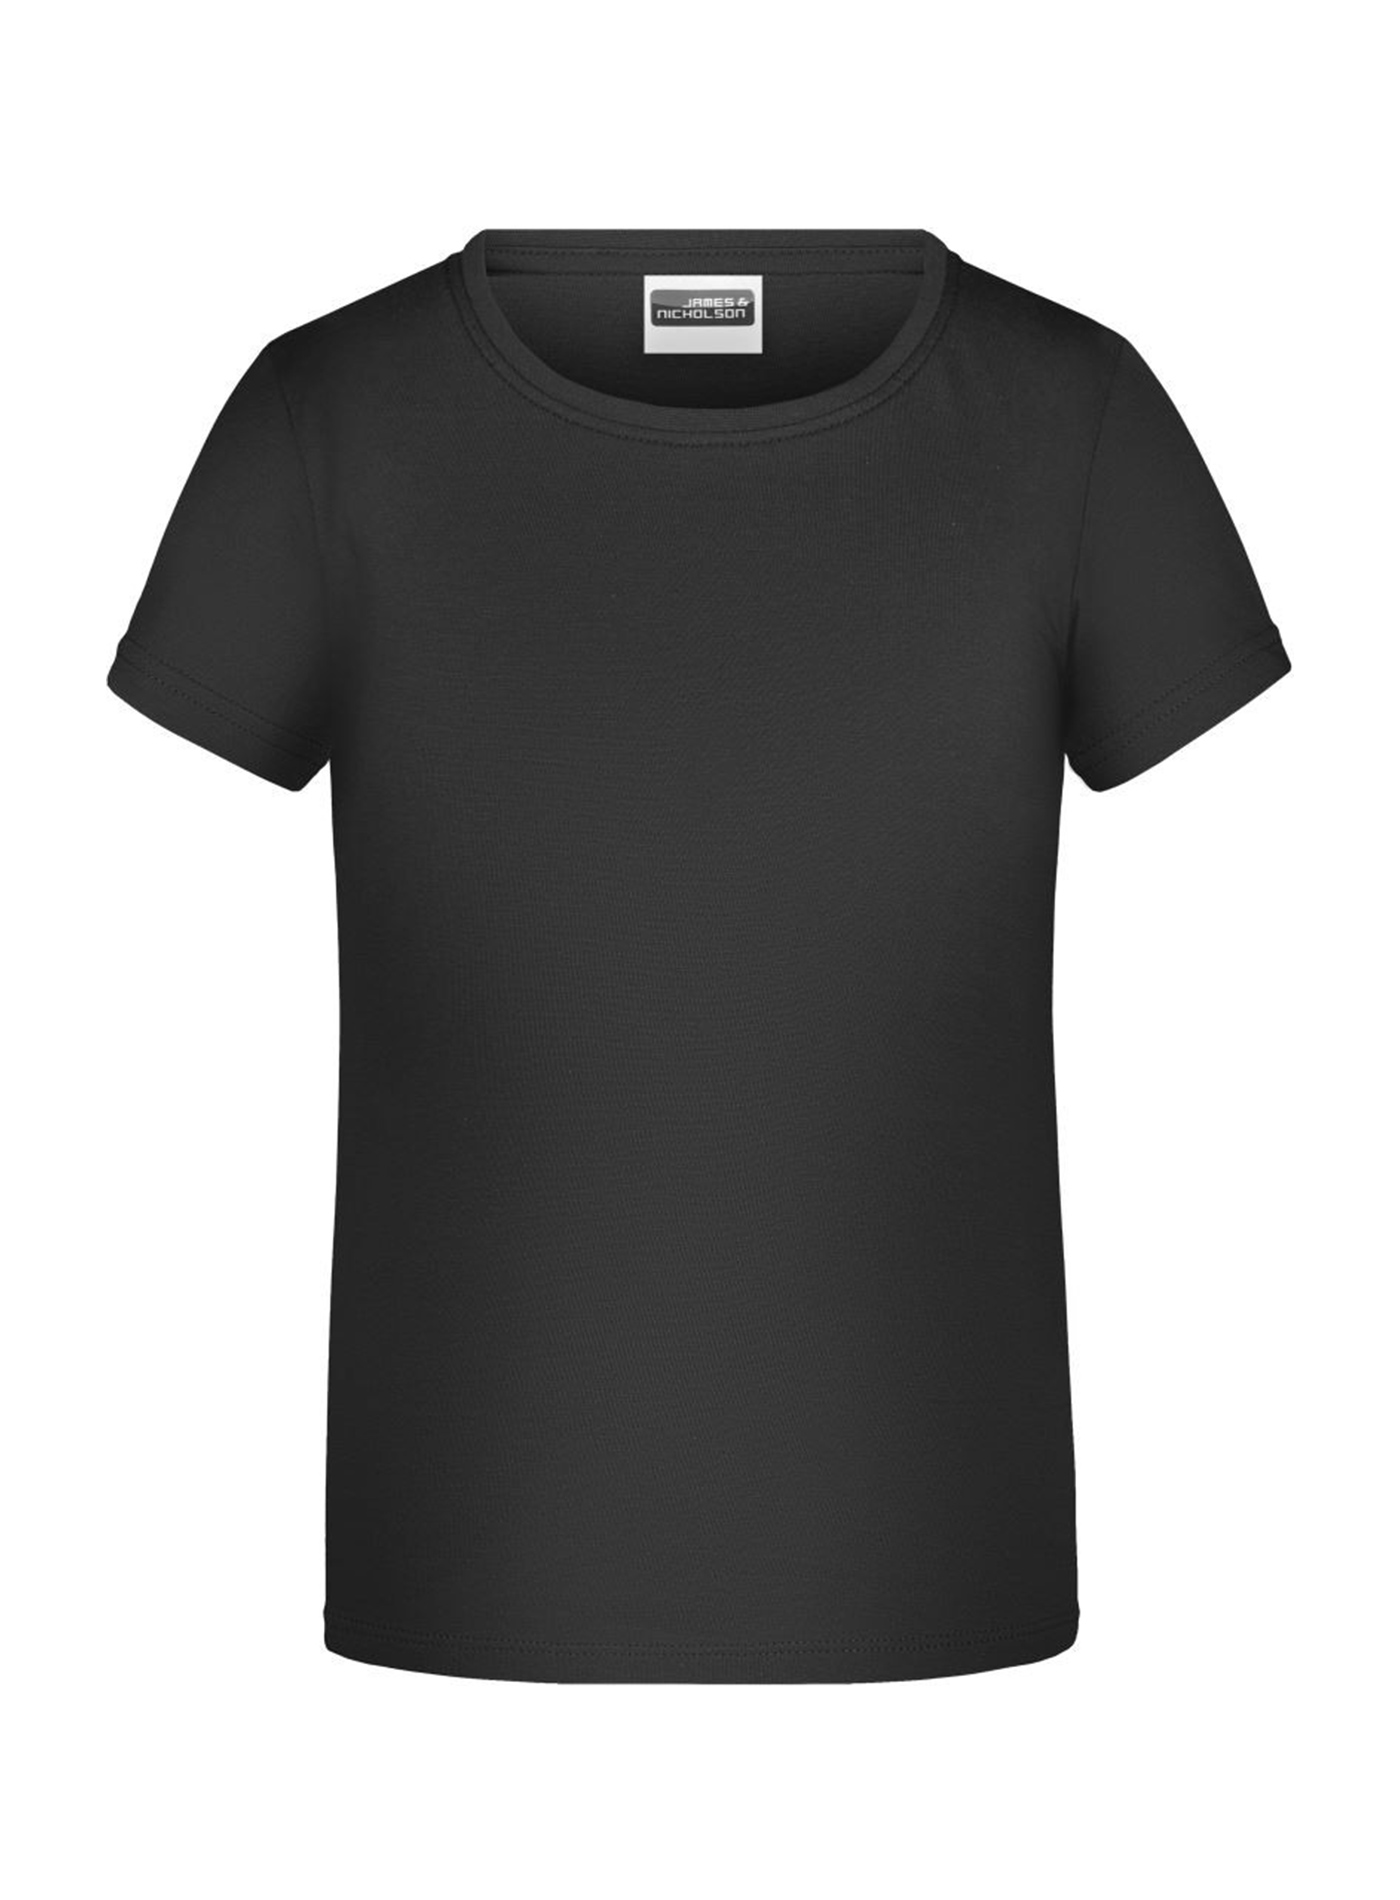 Dívčí tričko James & Nicholson - Černá XL